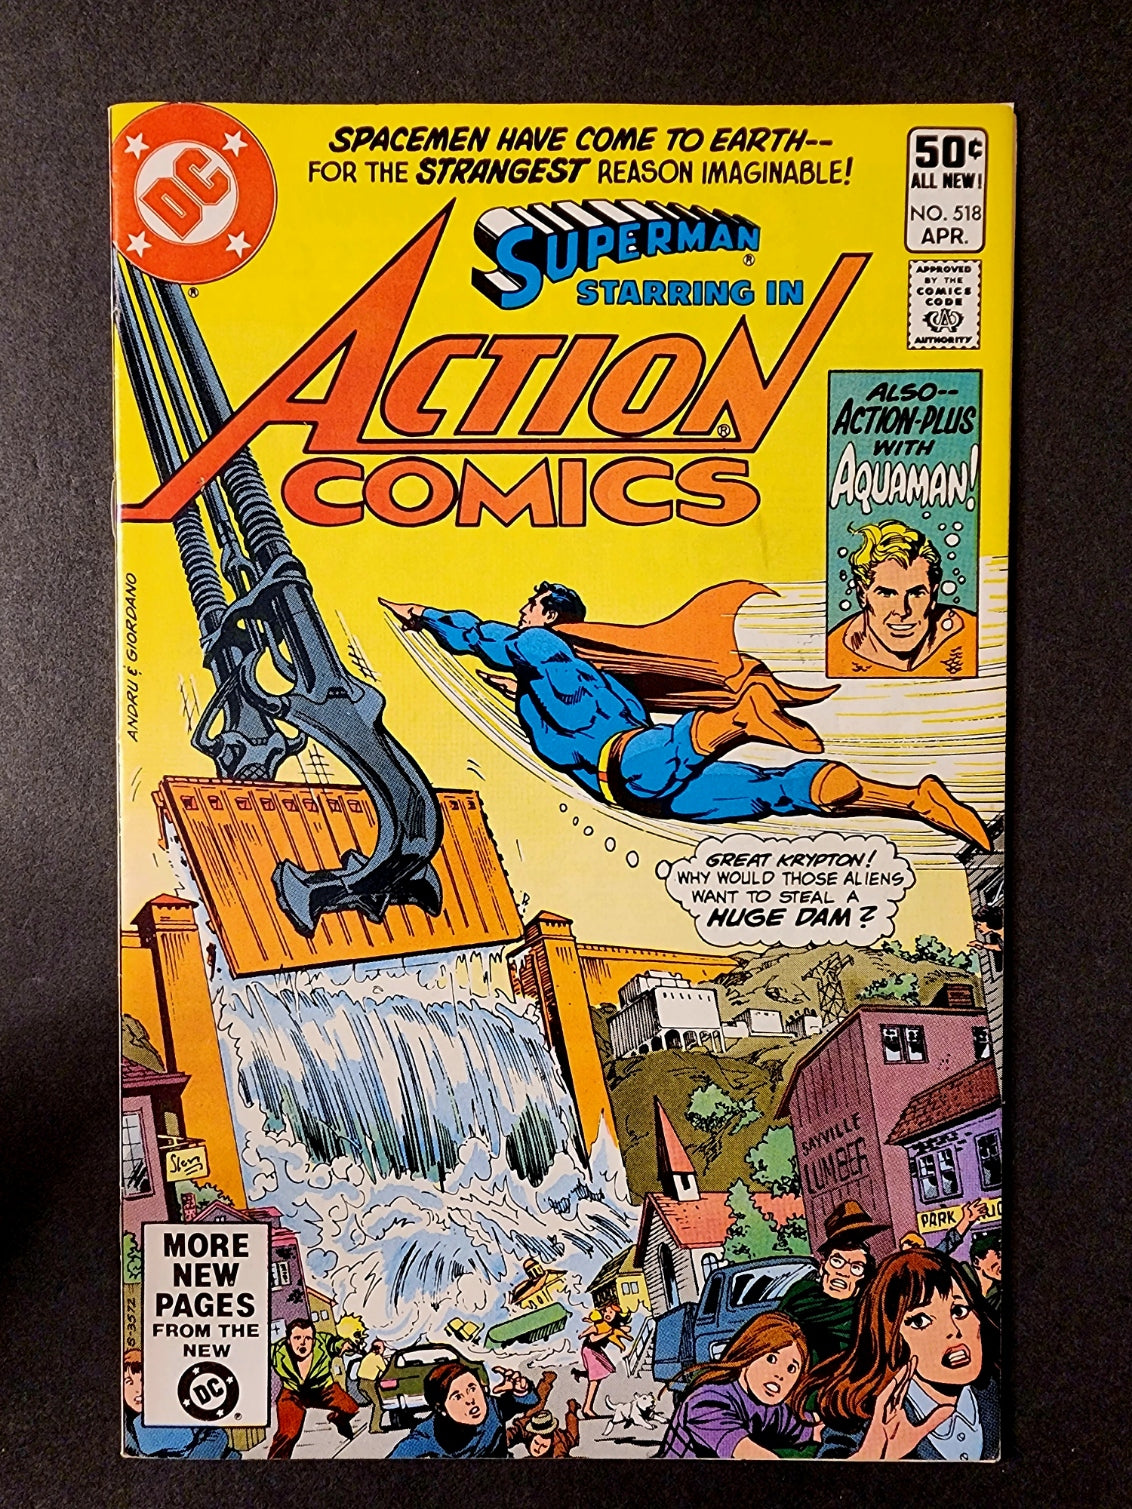 Action Comics #518 (FN)